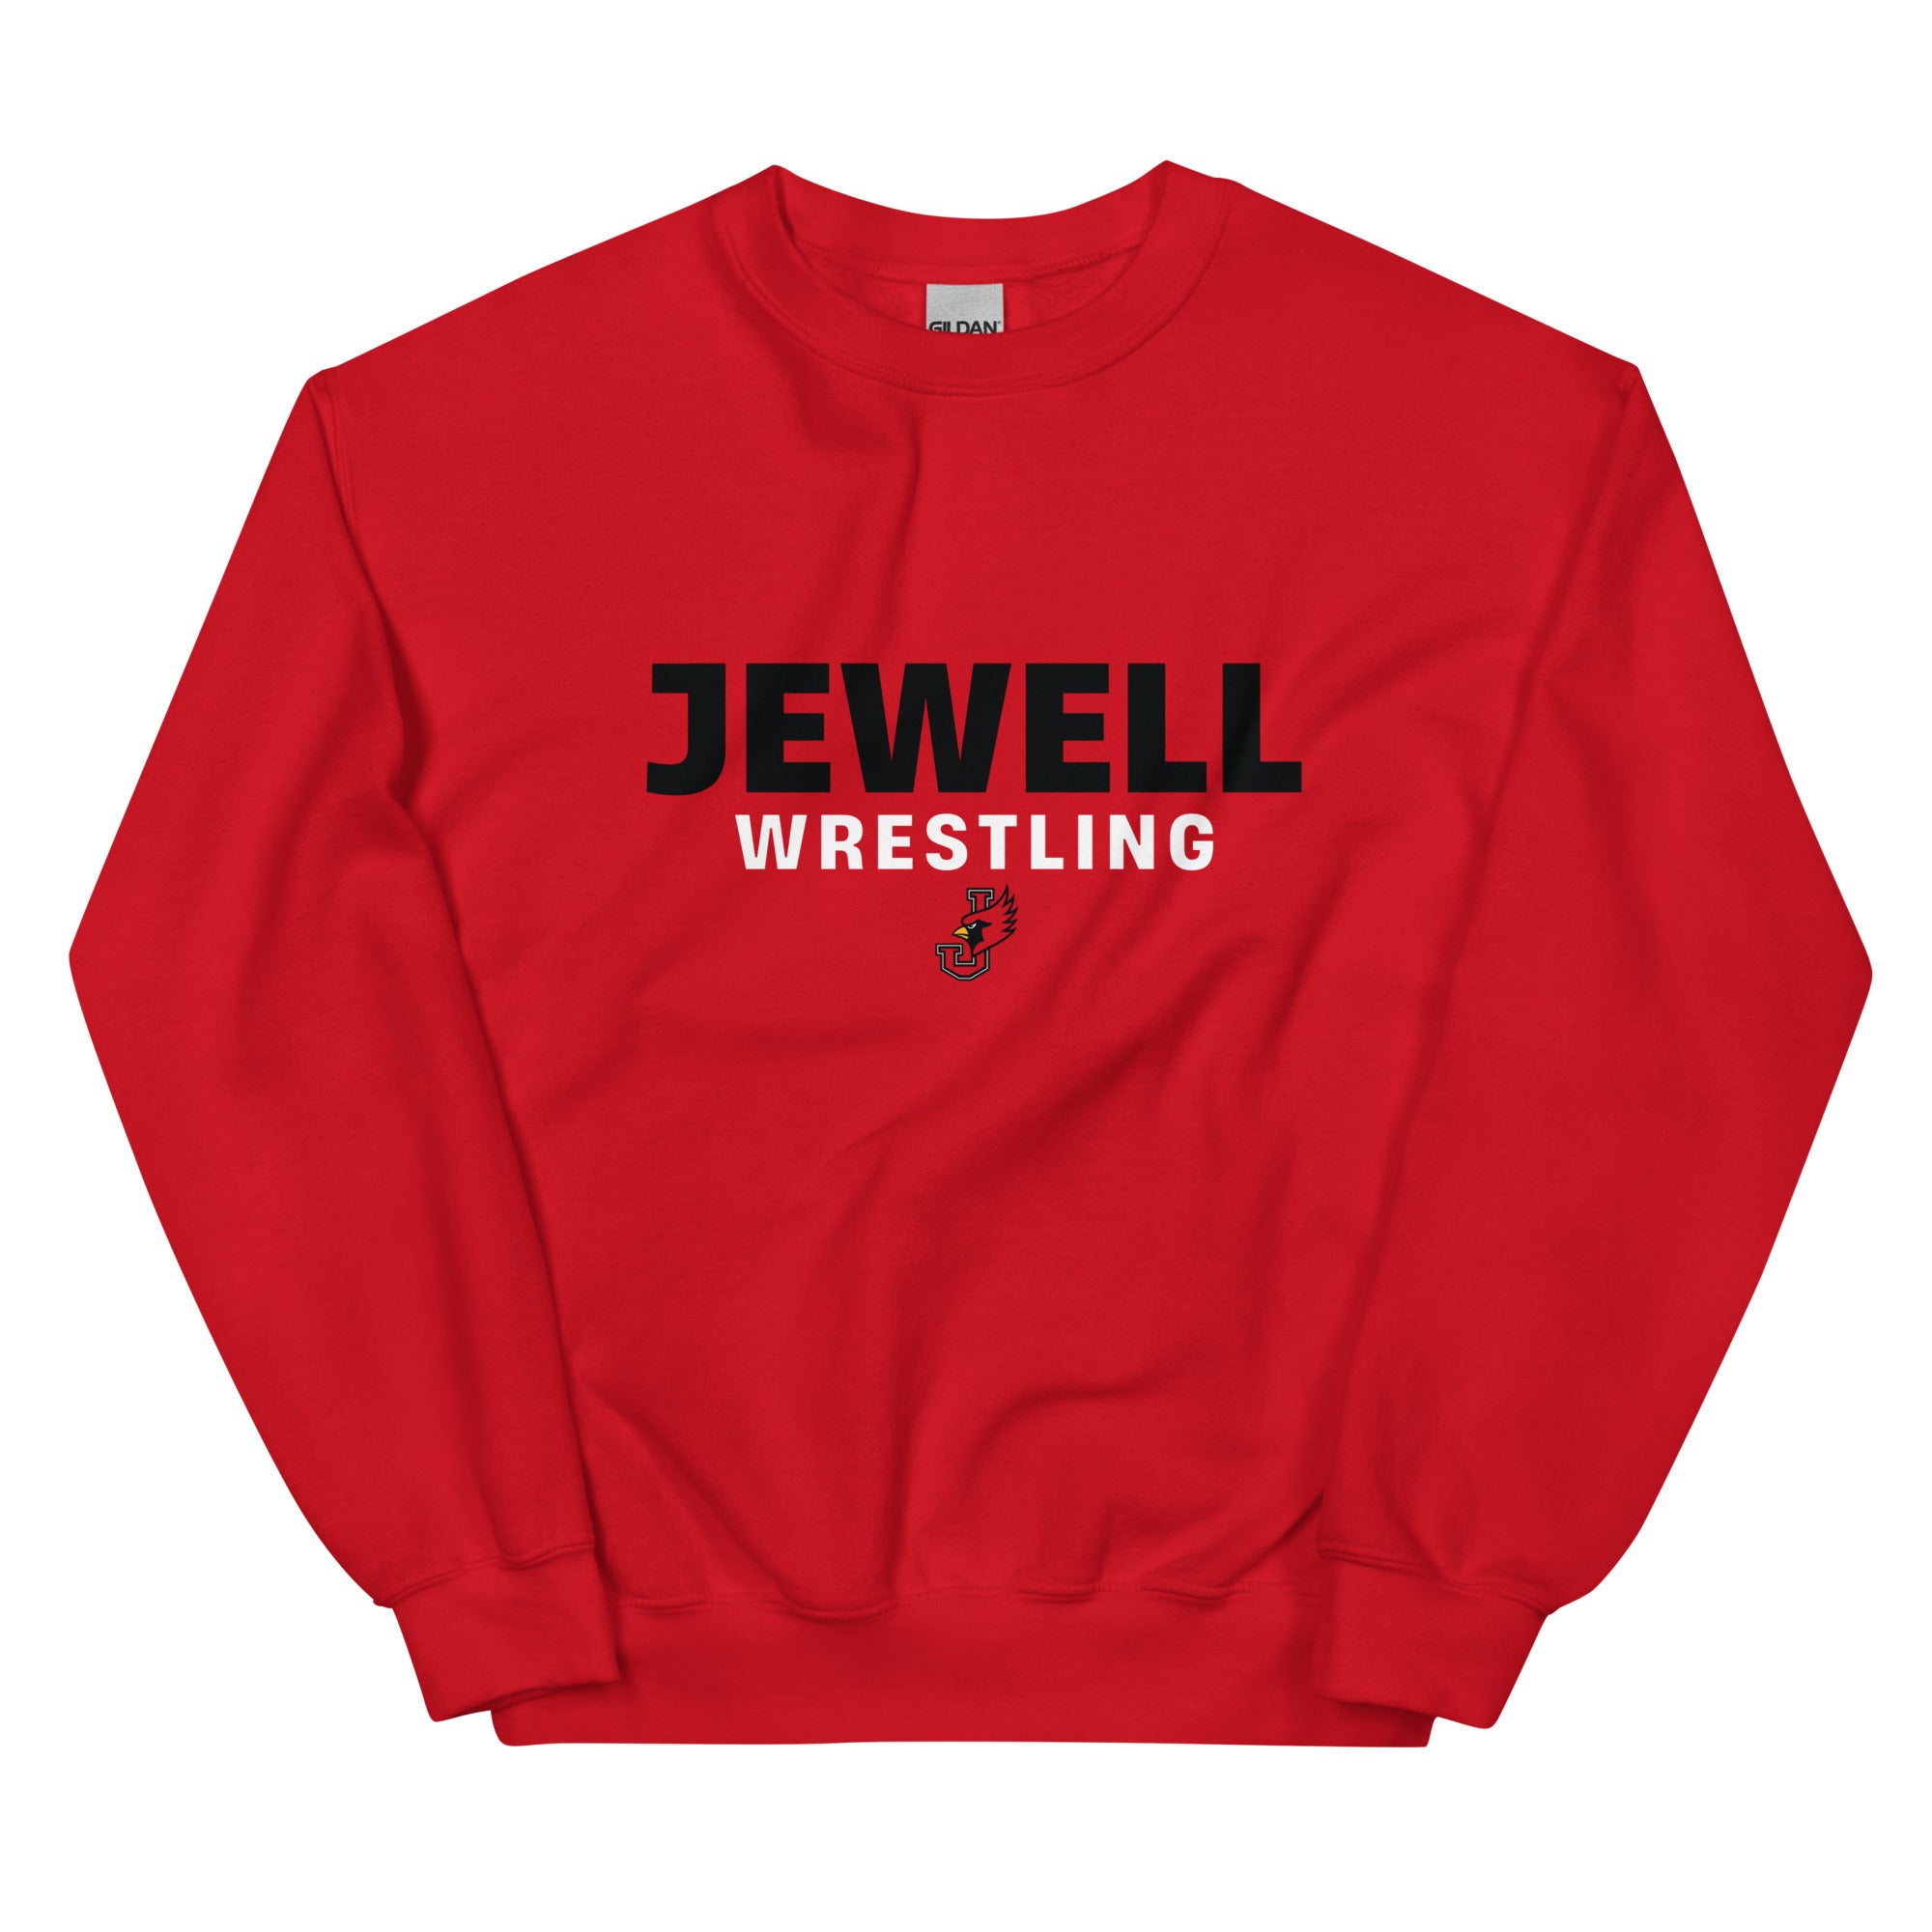 William Jewell Wrestling Unisex Crew Neck Sweatshirt